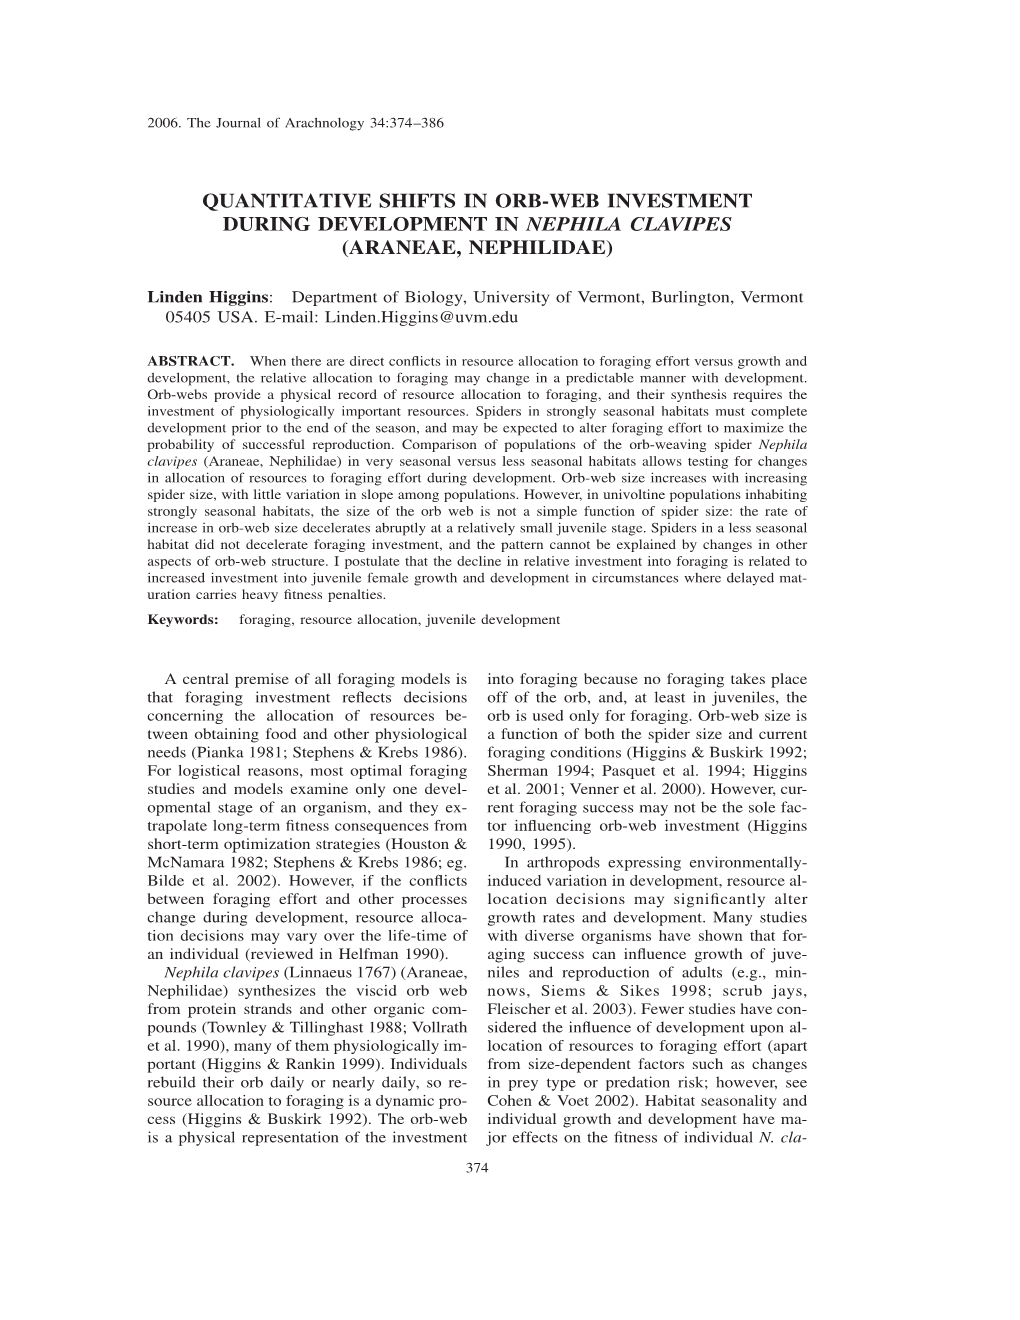 Quantitative Shifts in Orb-Web Investment During Development in Nephila Clavipes (Araneae, Nephilidae)